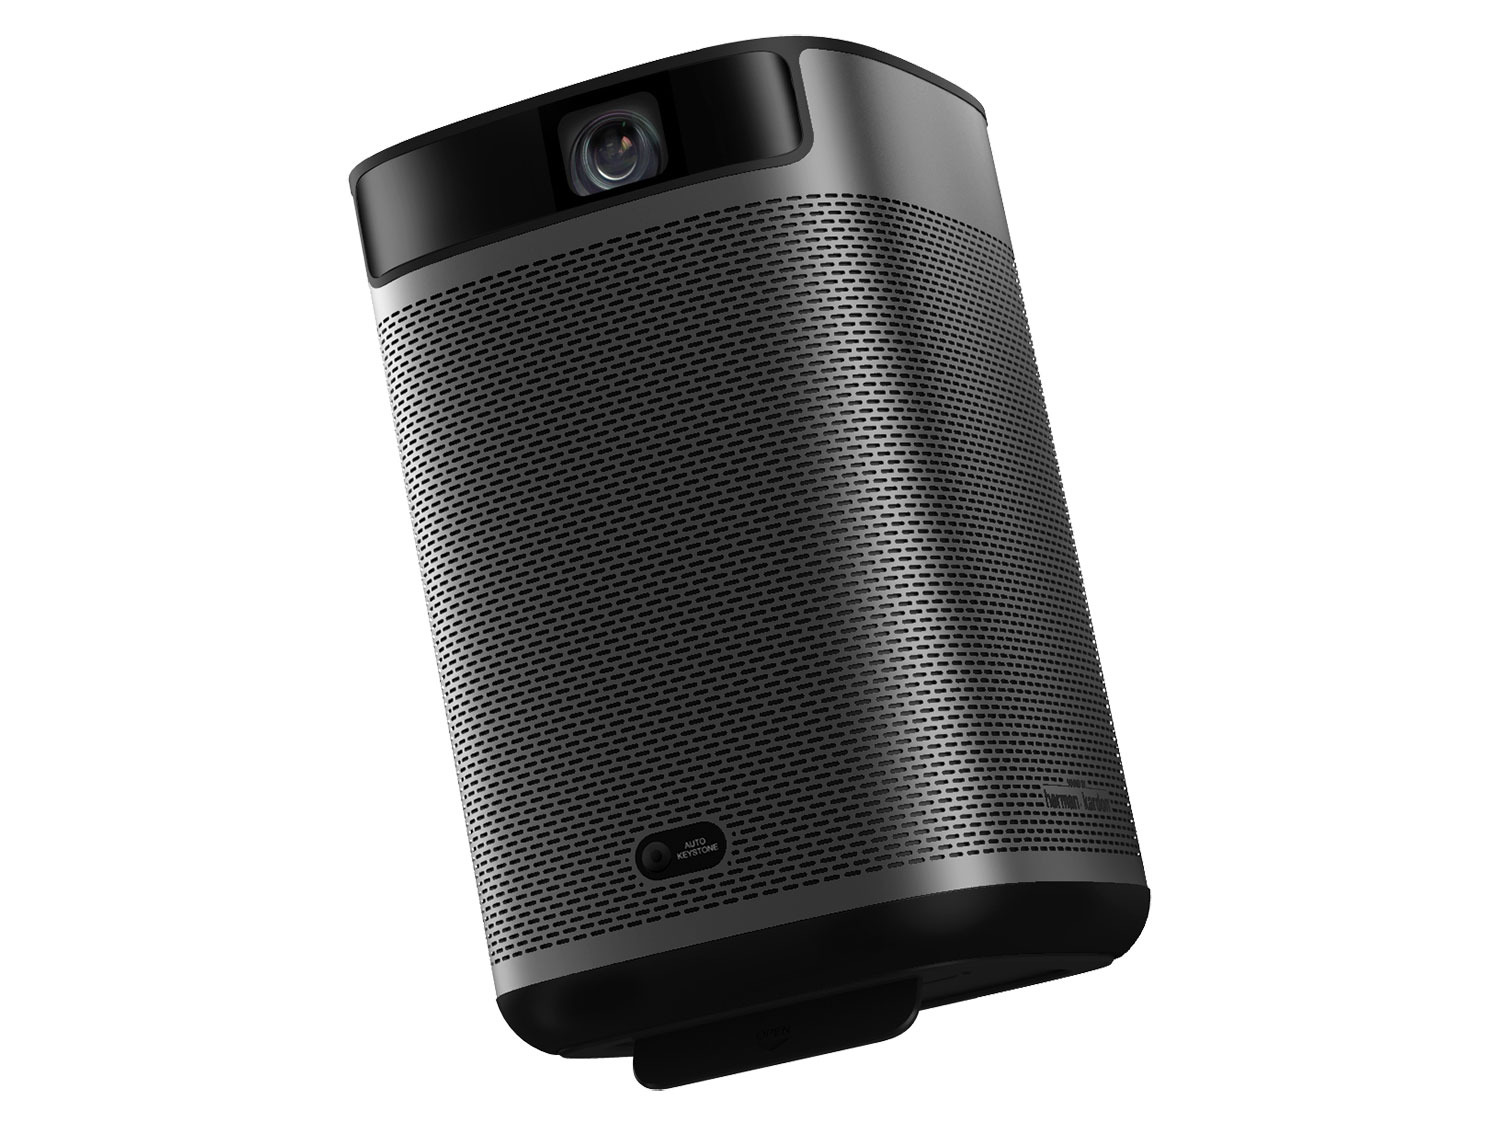 XGIMI MoGo Pro+ Portabler Beamer online kaufen